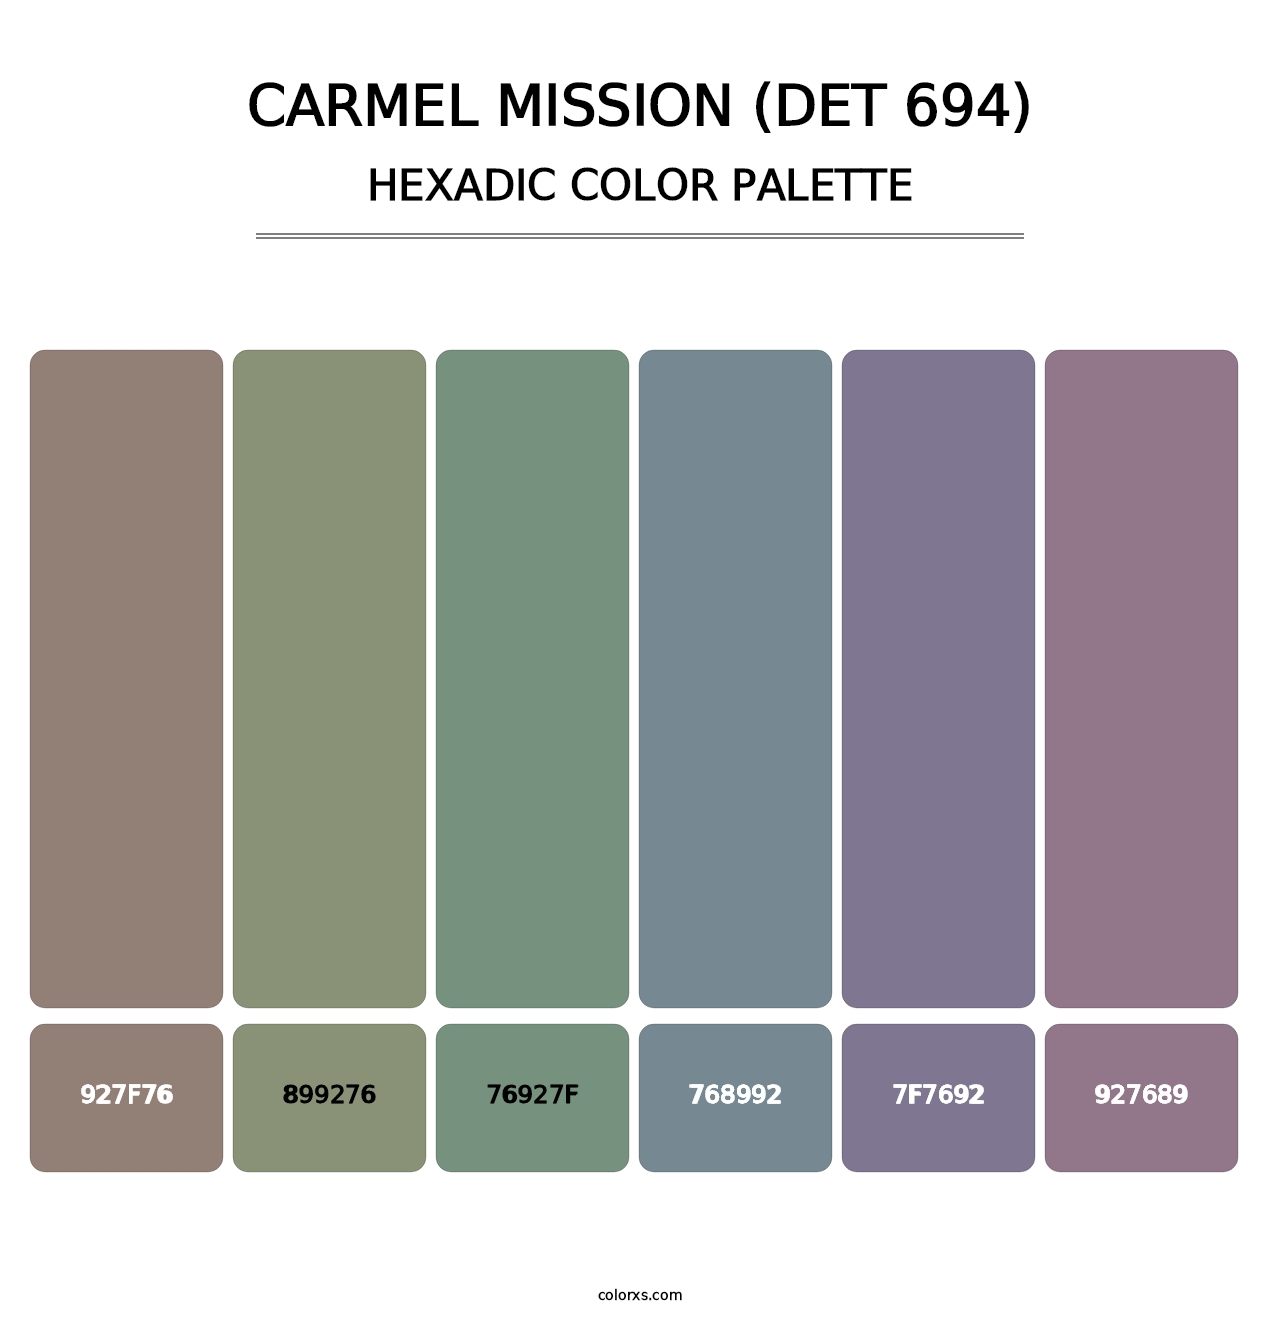 Carmel Mission (DET 694) - Hexadic Color Palette